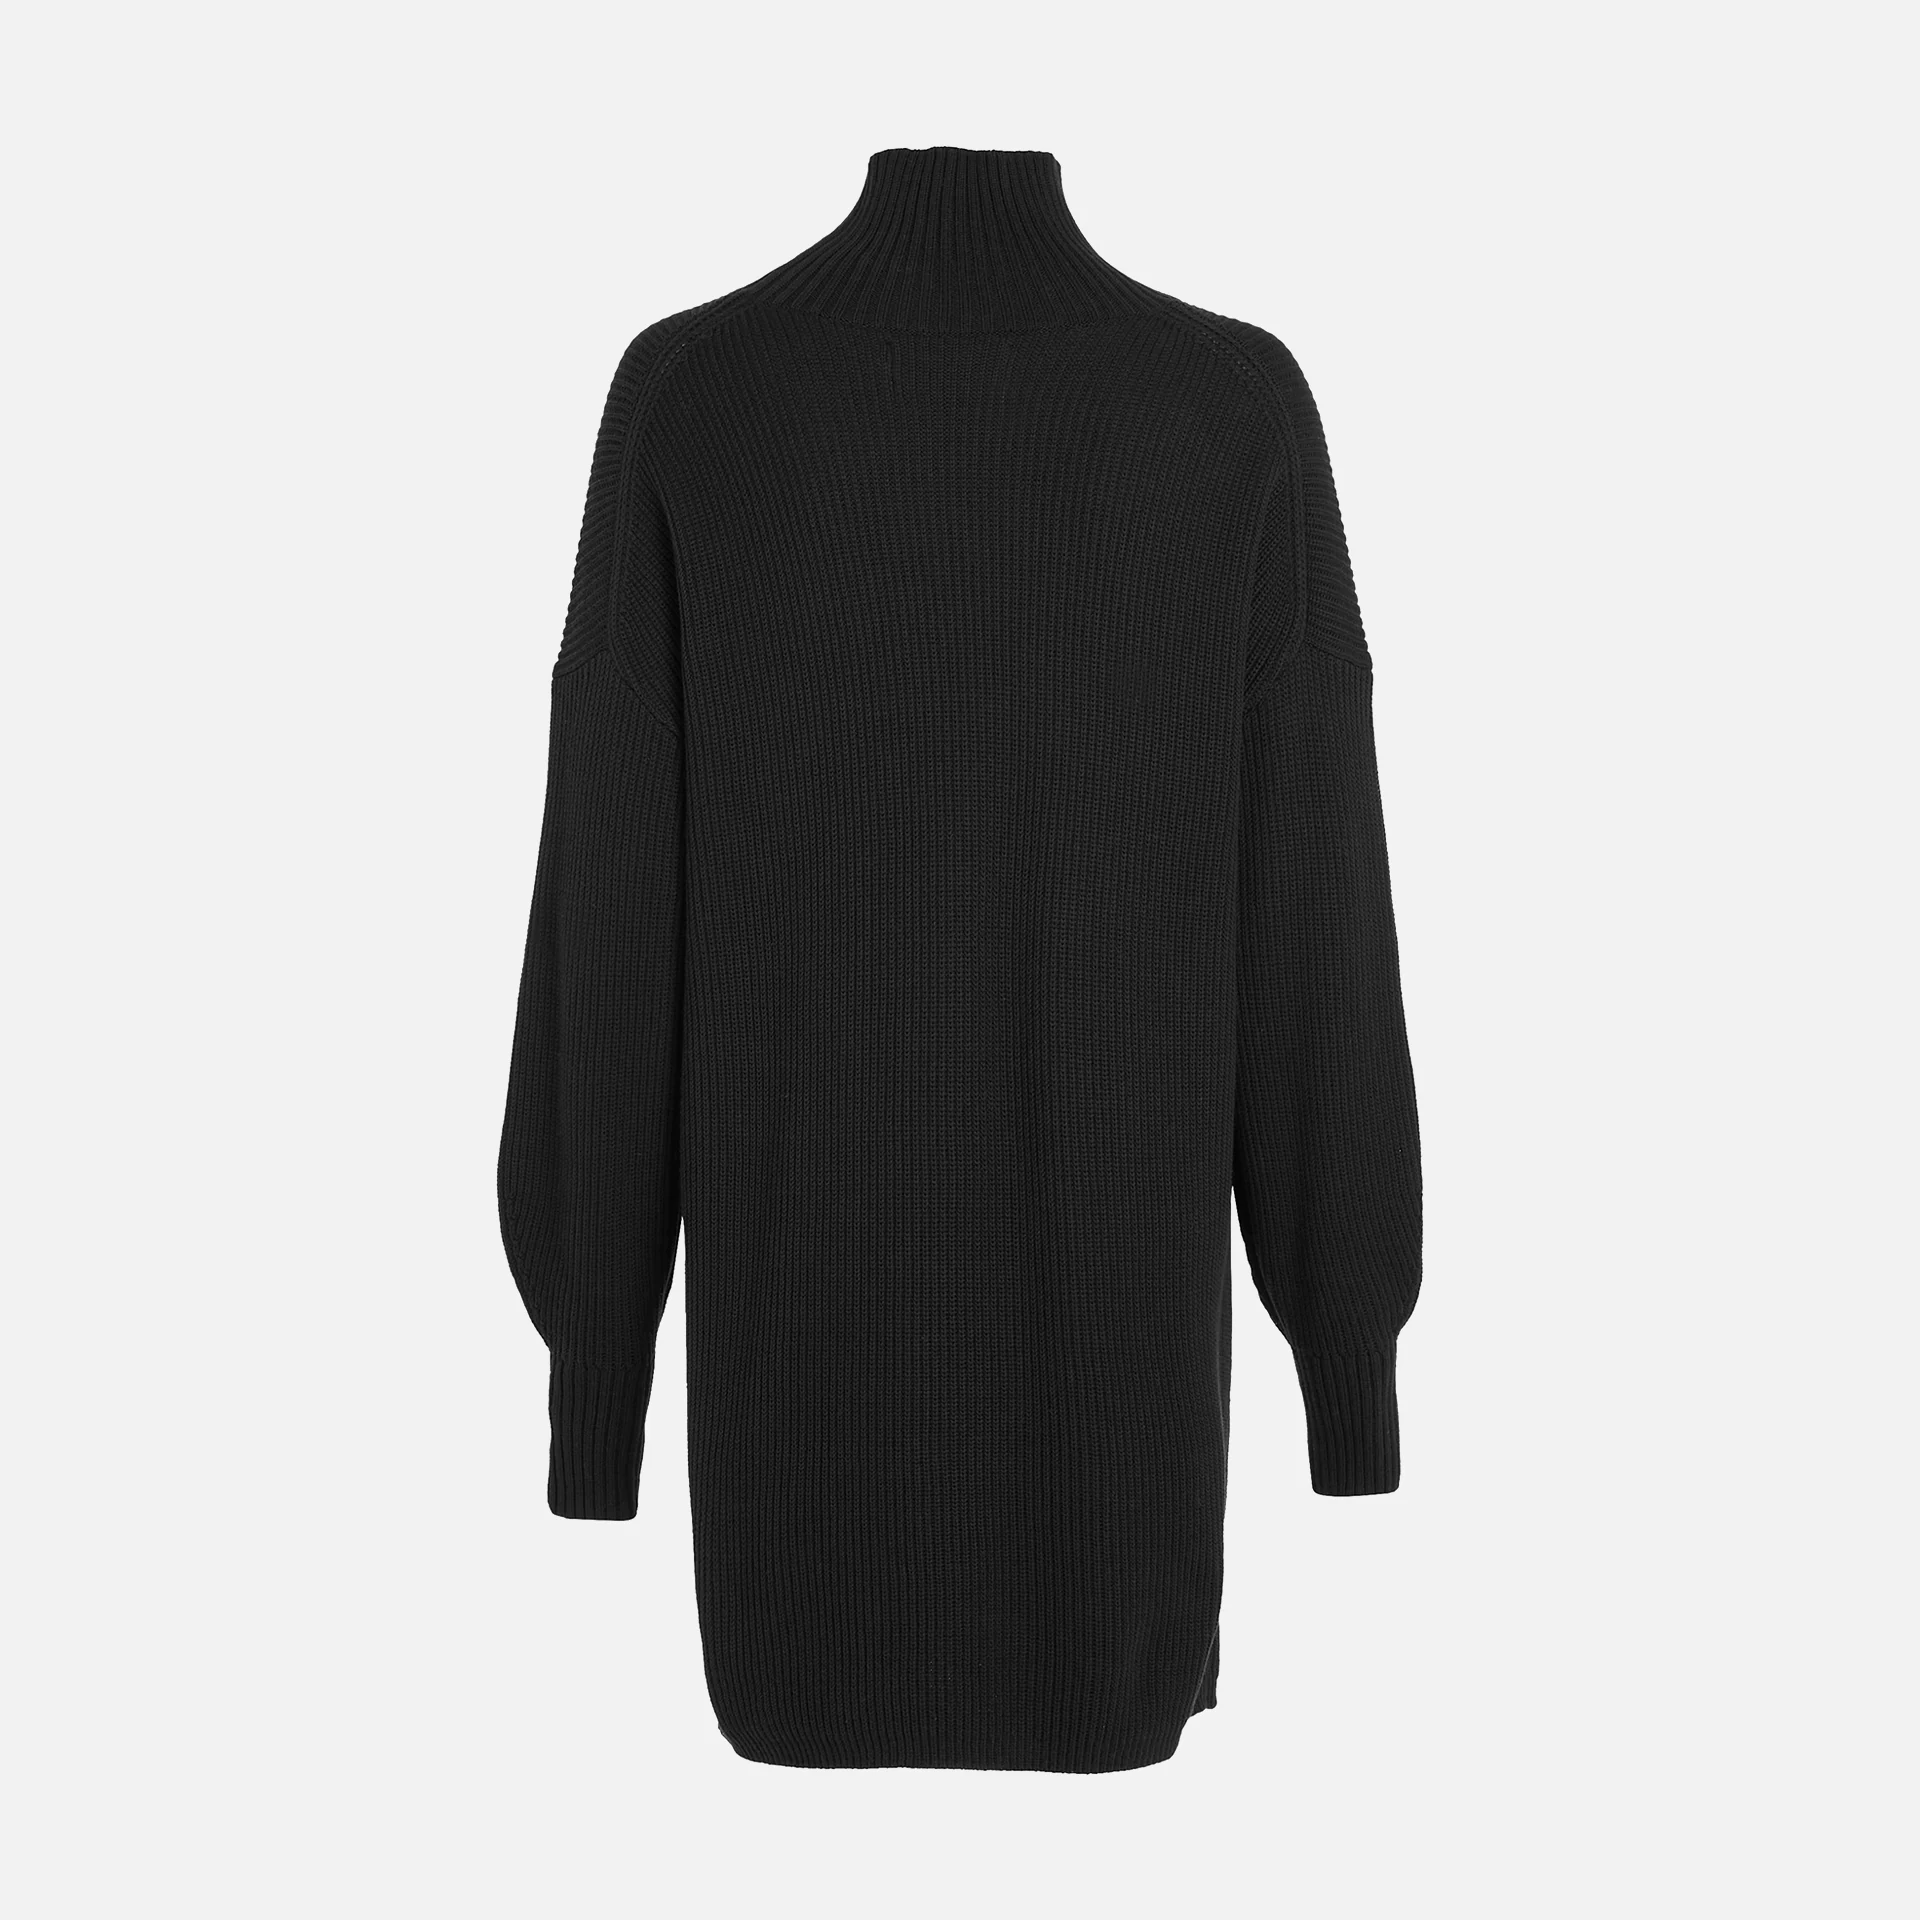 Dress Klein Jeans Black Calvin Loose Label Sweater Woven